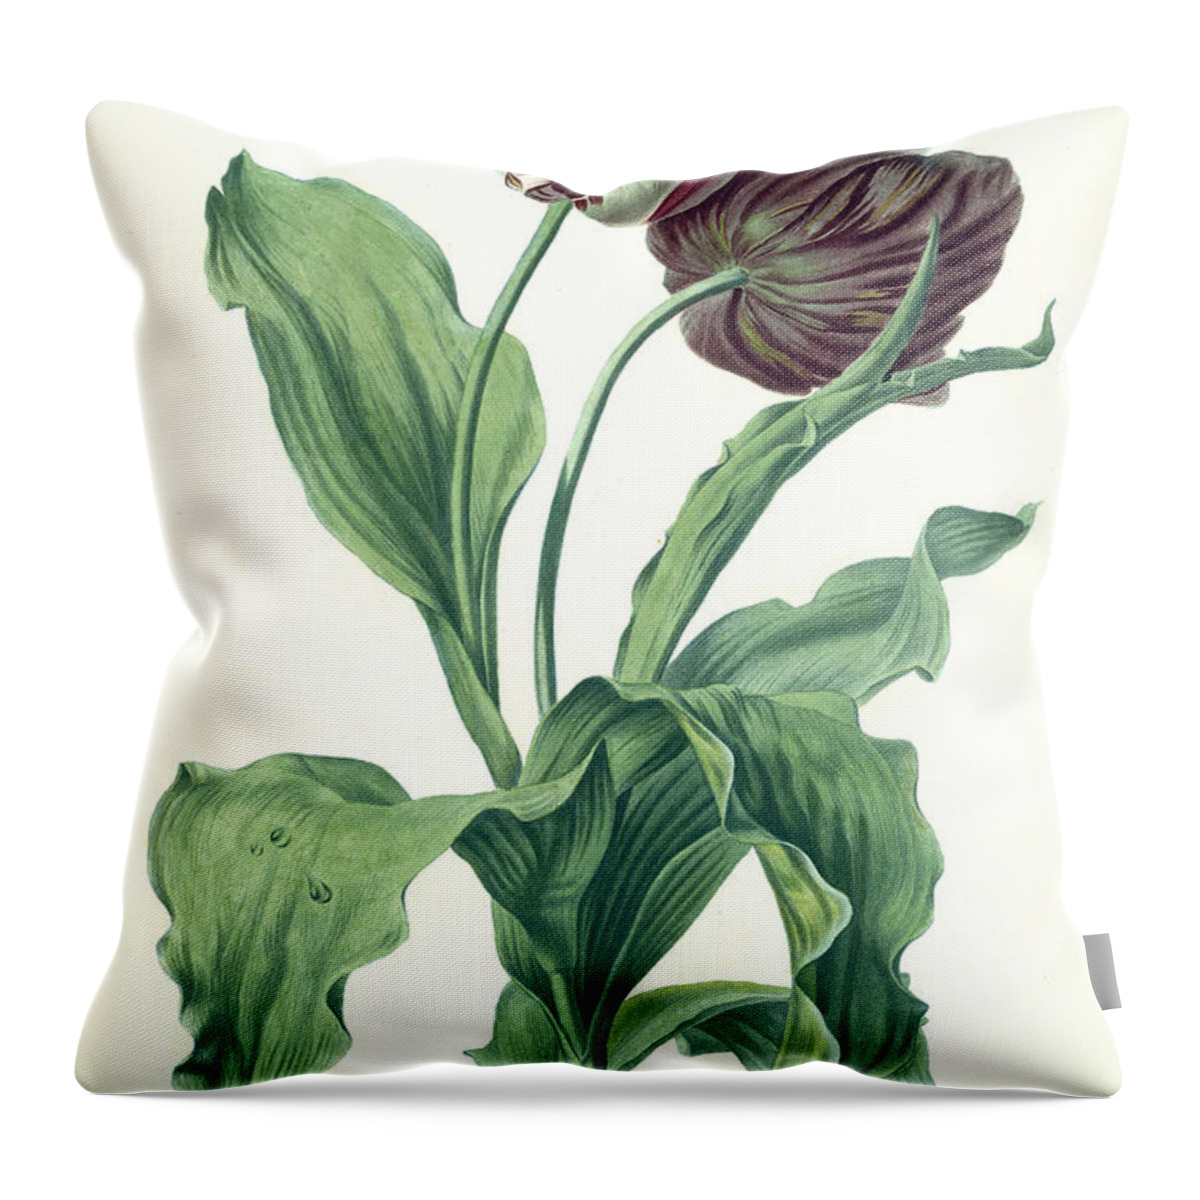 Tulipa Gesneriana Throw Pillow featuring the painting Garden Tulip by Gerard van Spaendonck